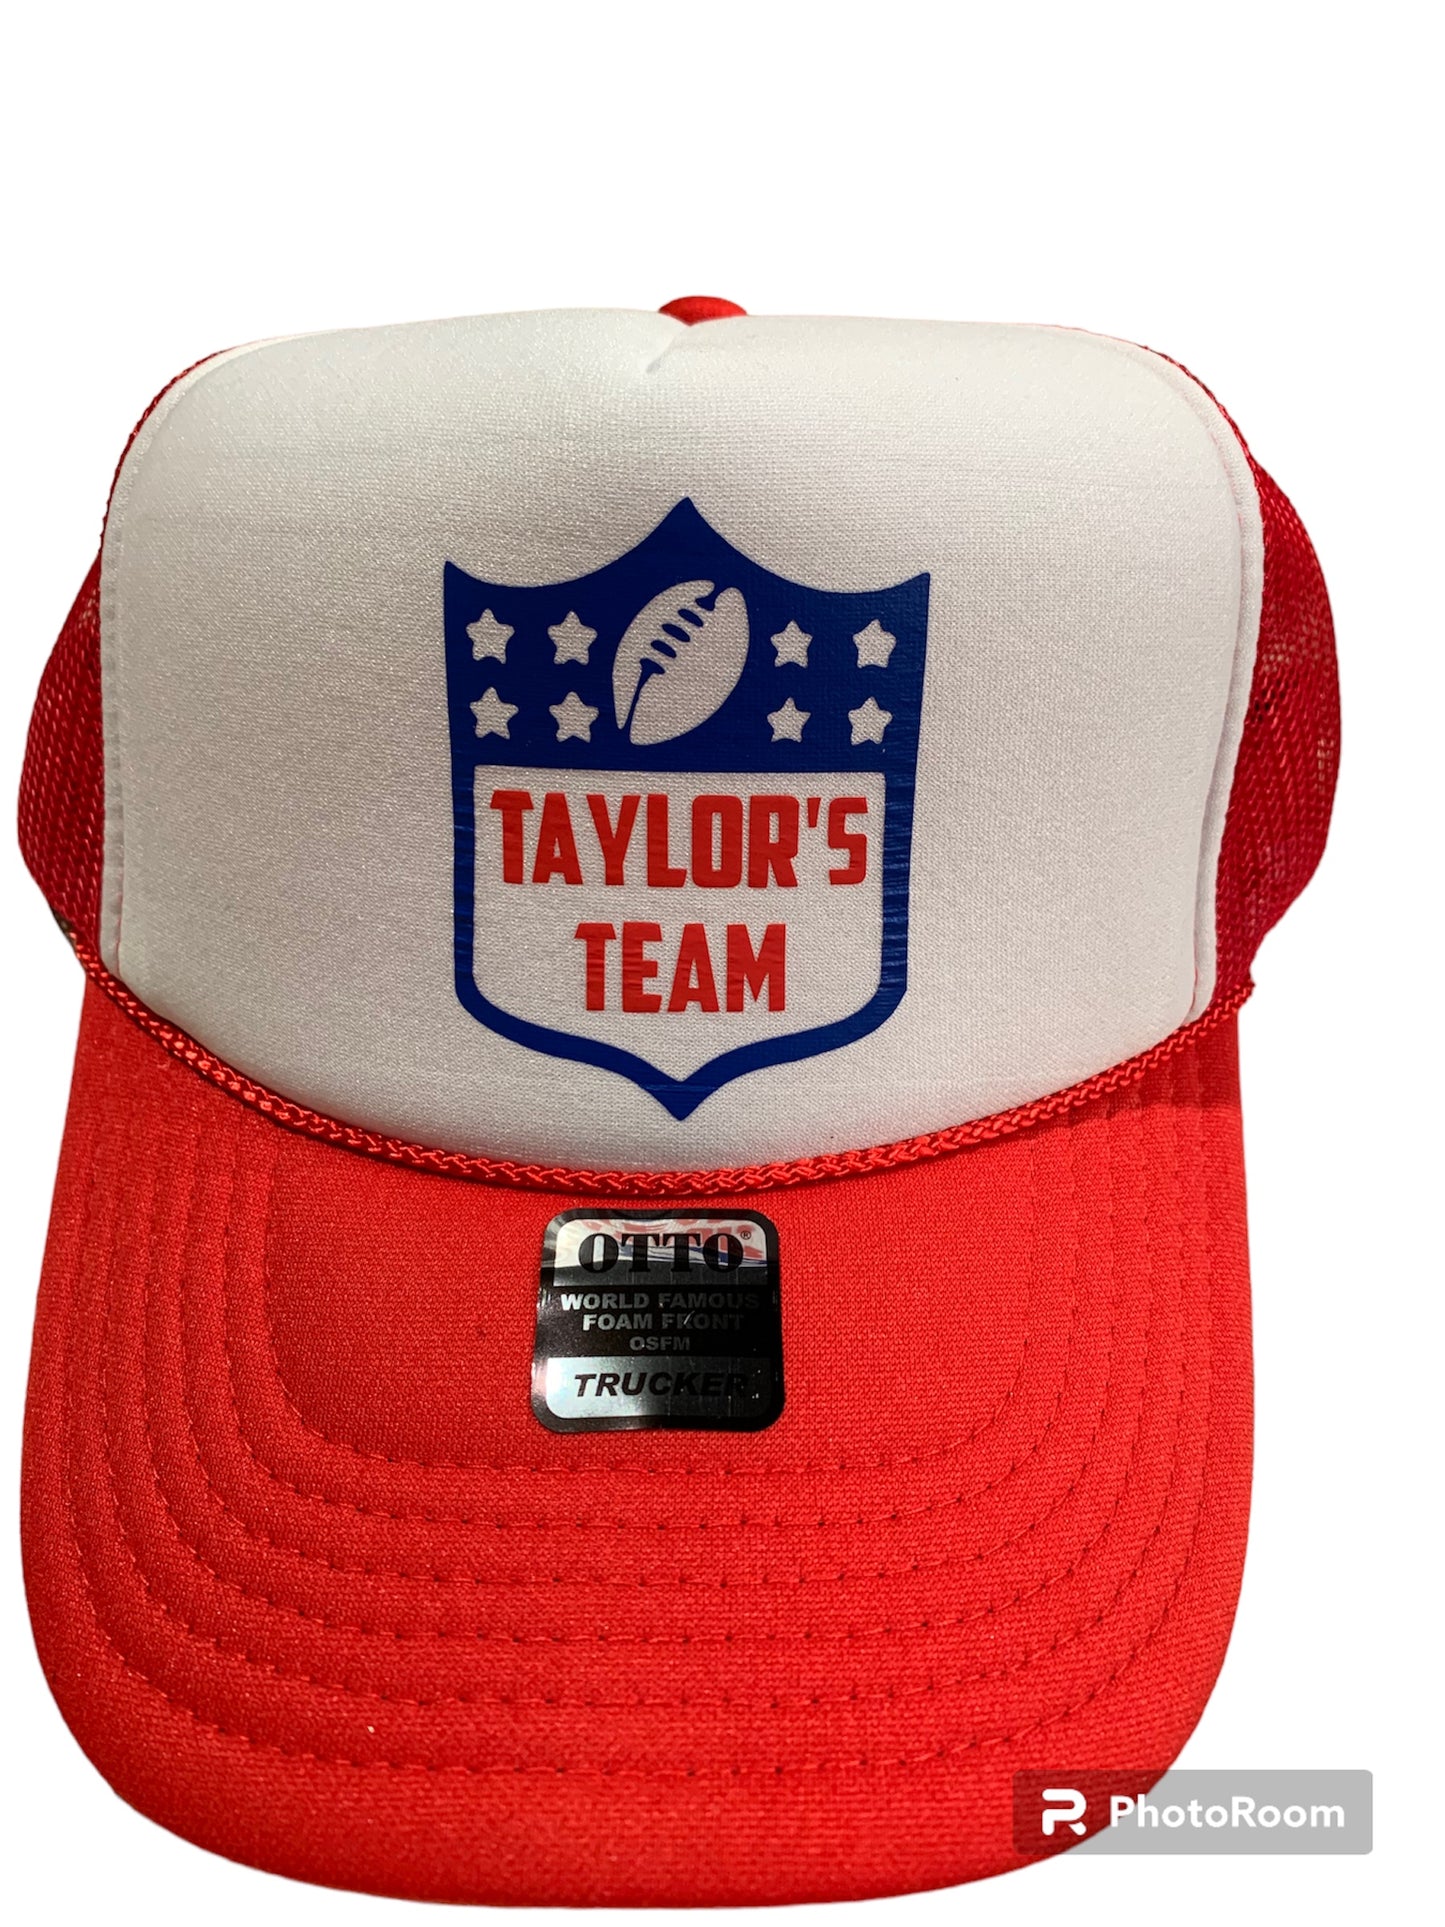 Taylor's Team Trucker Hat